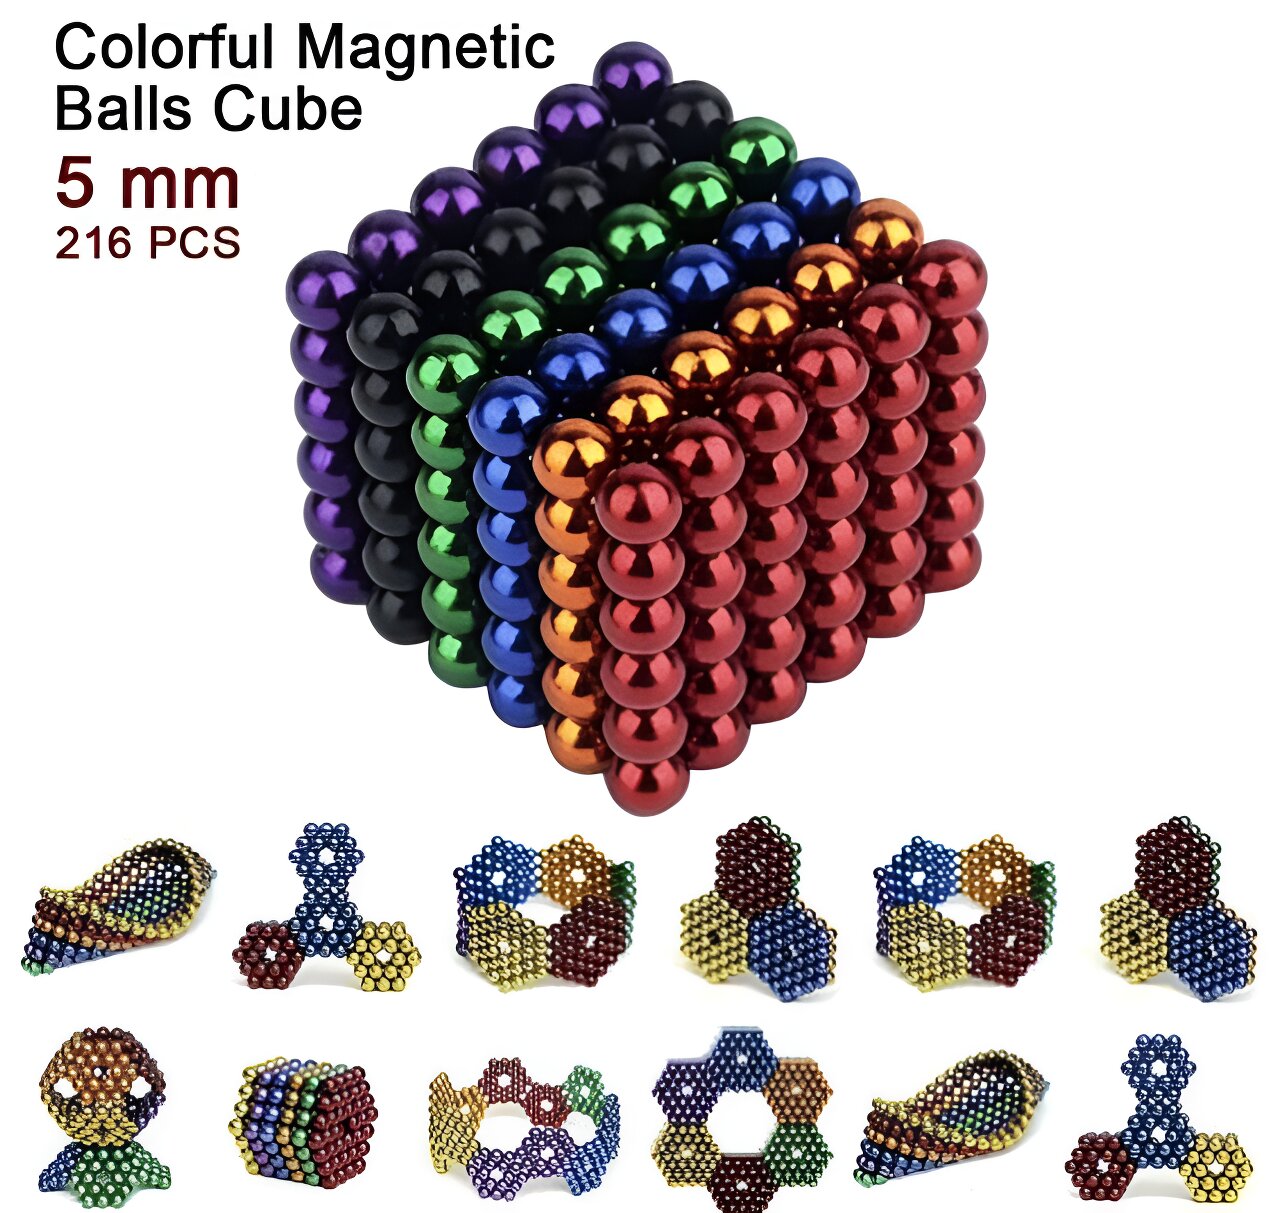 Rainbow 3mm magnetic balls